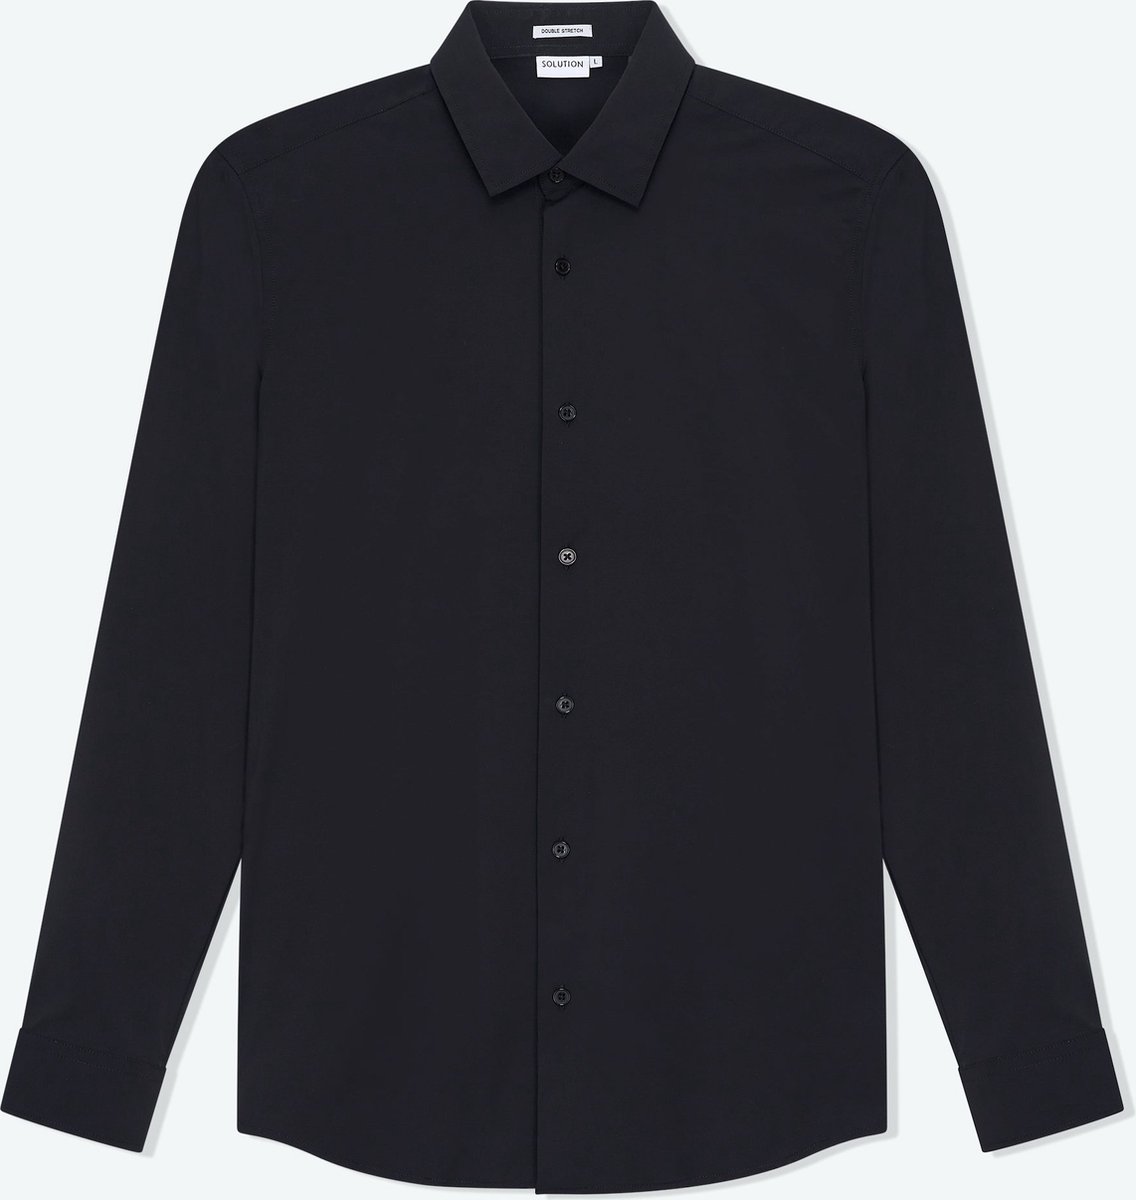 Solution Clothing Felix - Casual Overhemd - Kreukvrij - Lange Mouw - Volwassenen - Heren - Mannen - Zwart - M - M - Solution Clothing